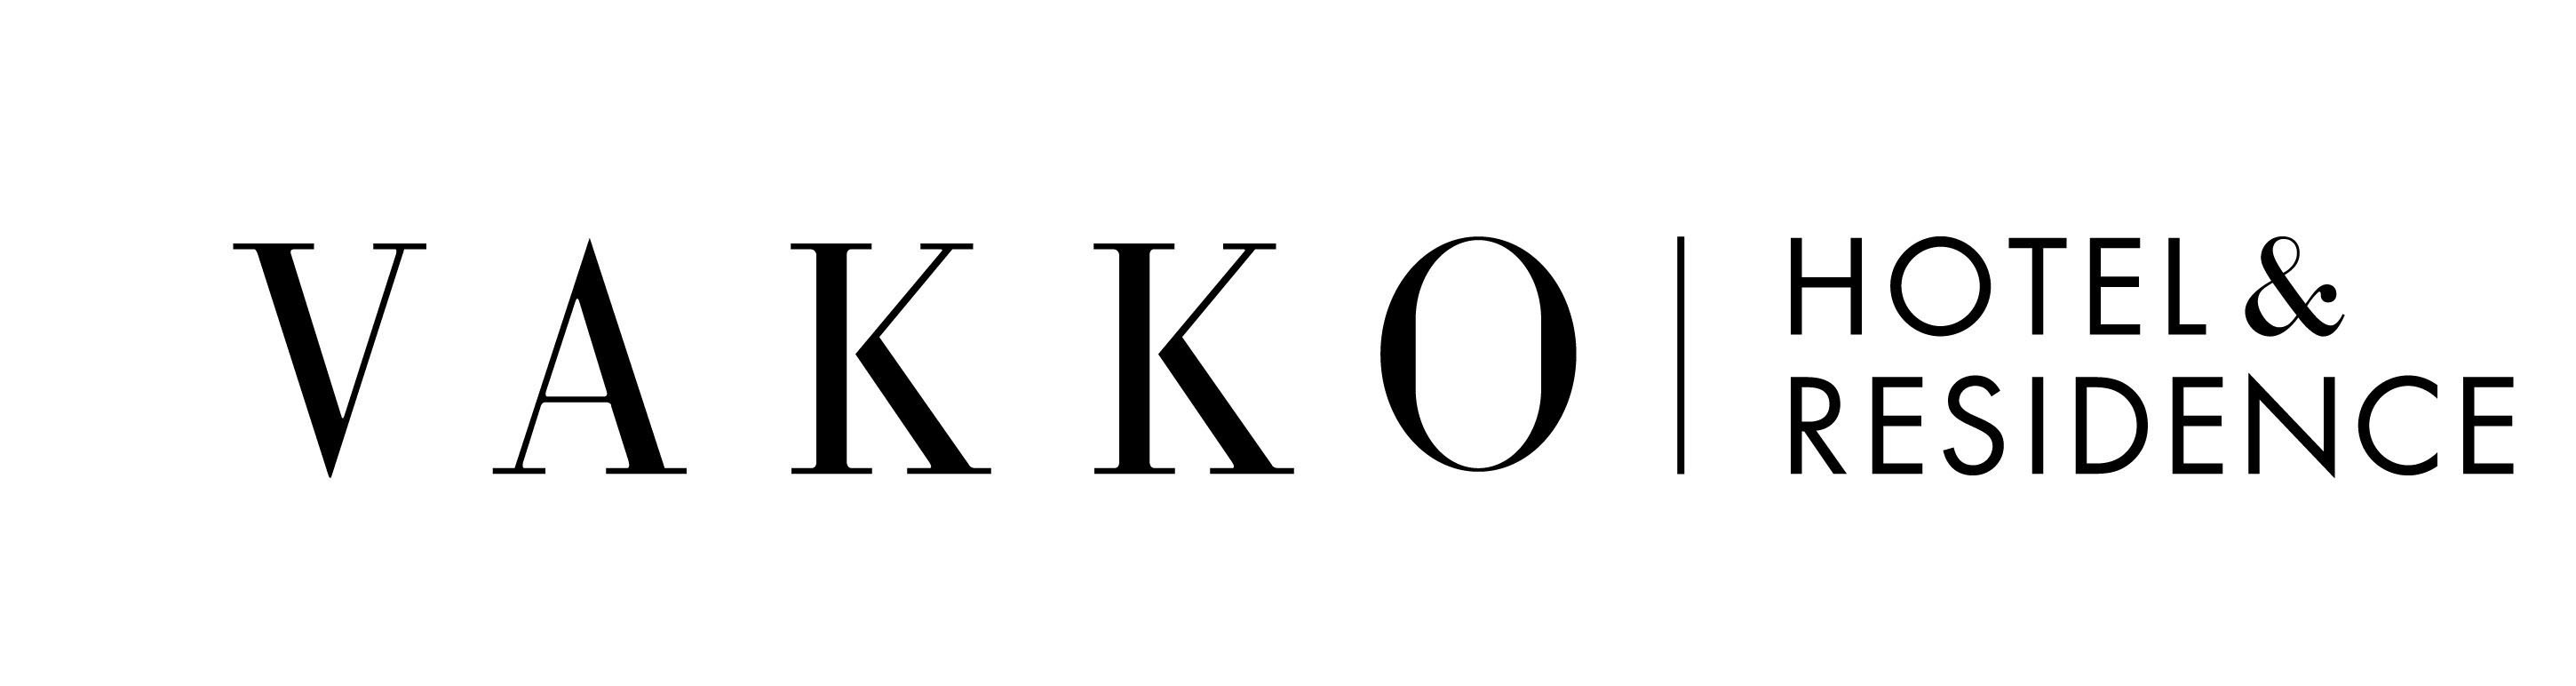 VAKKO-HOTEL logo-2